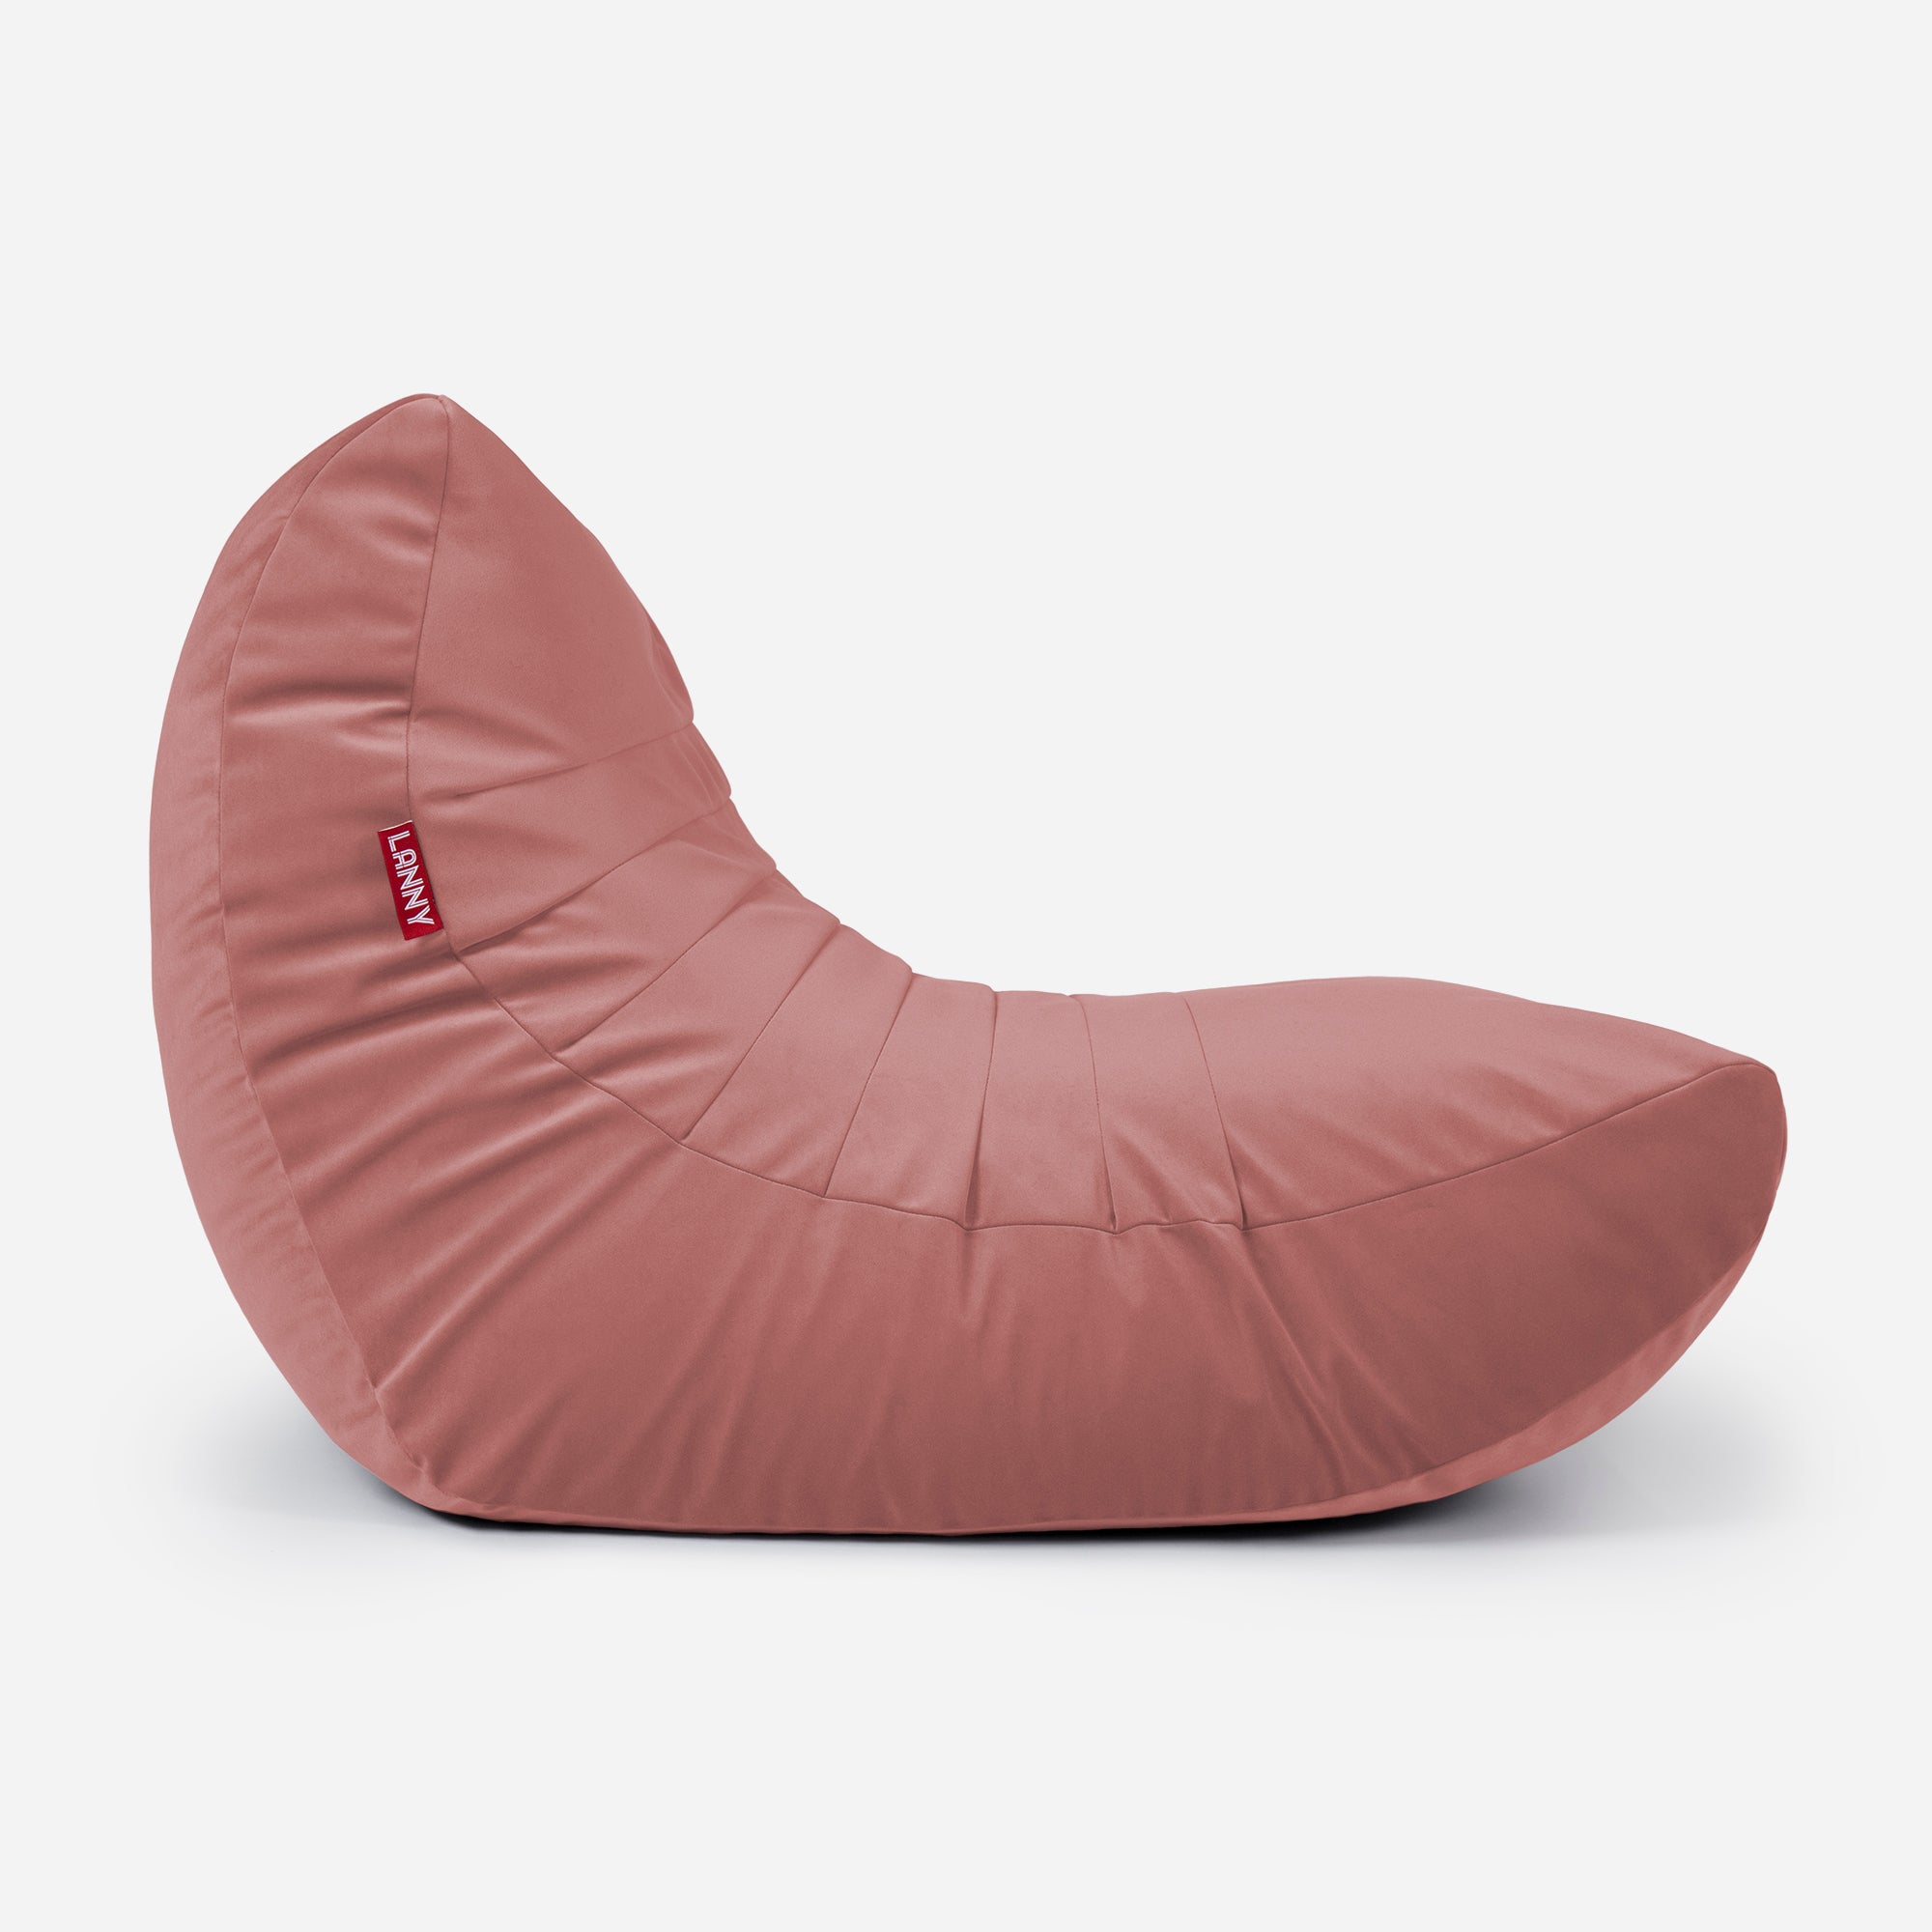 Beanbag Curvy Design Pink color 